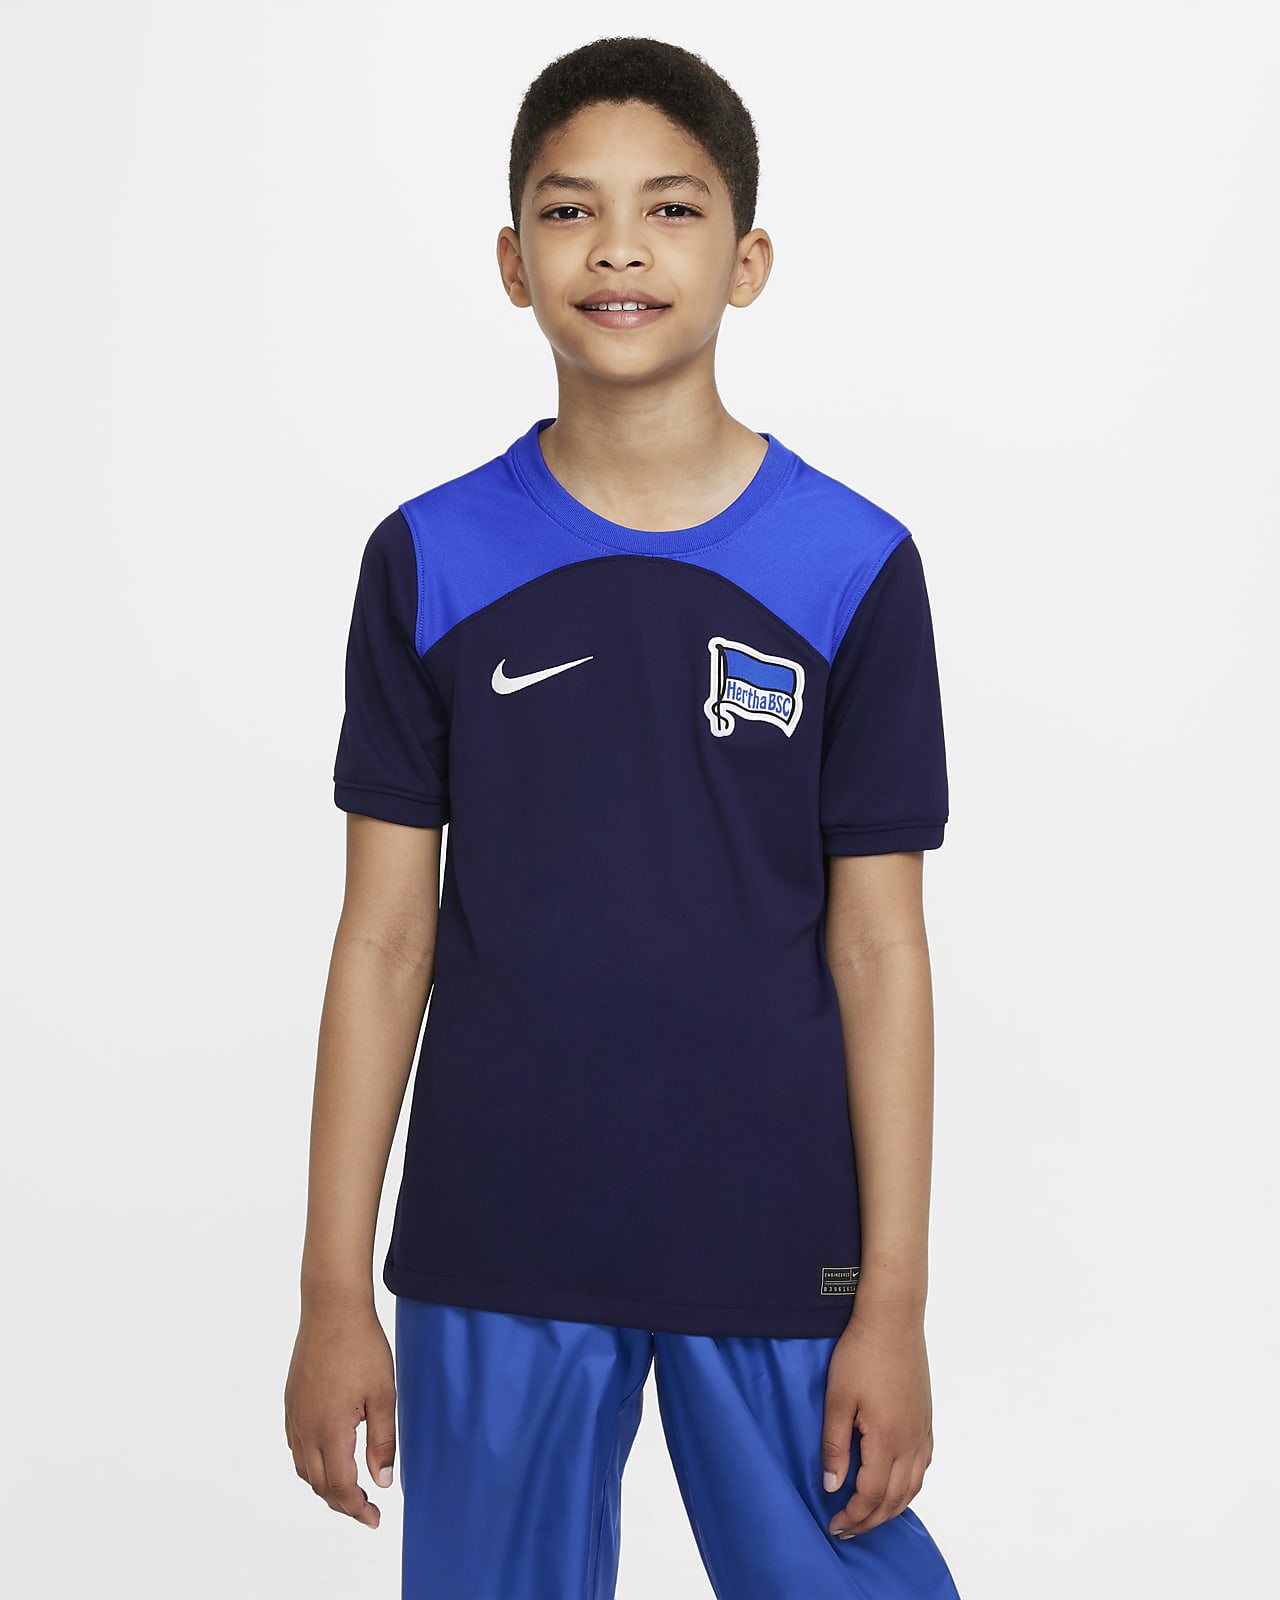 Hertha BSC 2022/23 Stadium Away Older Kids' Nike Dri-FIT Football Shirt